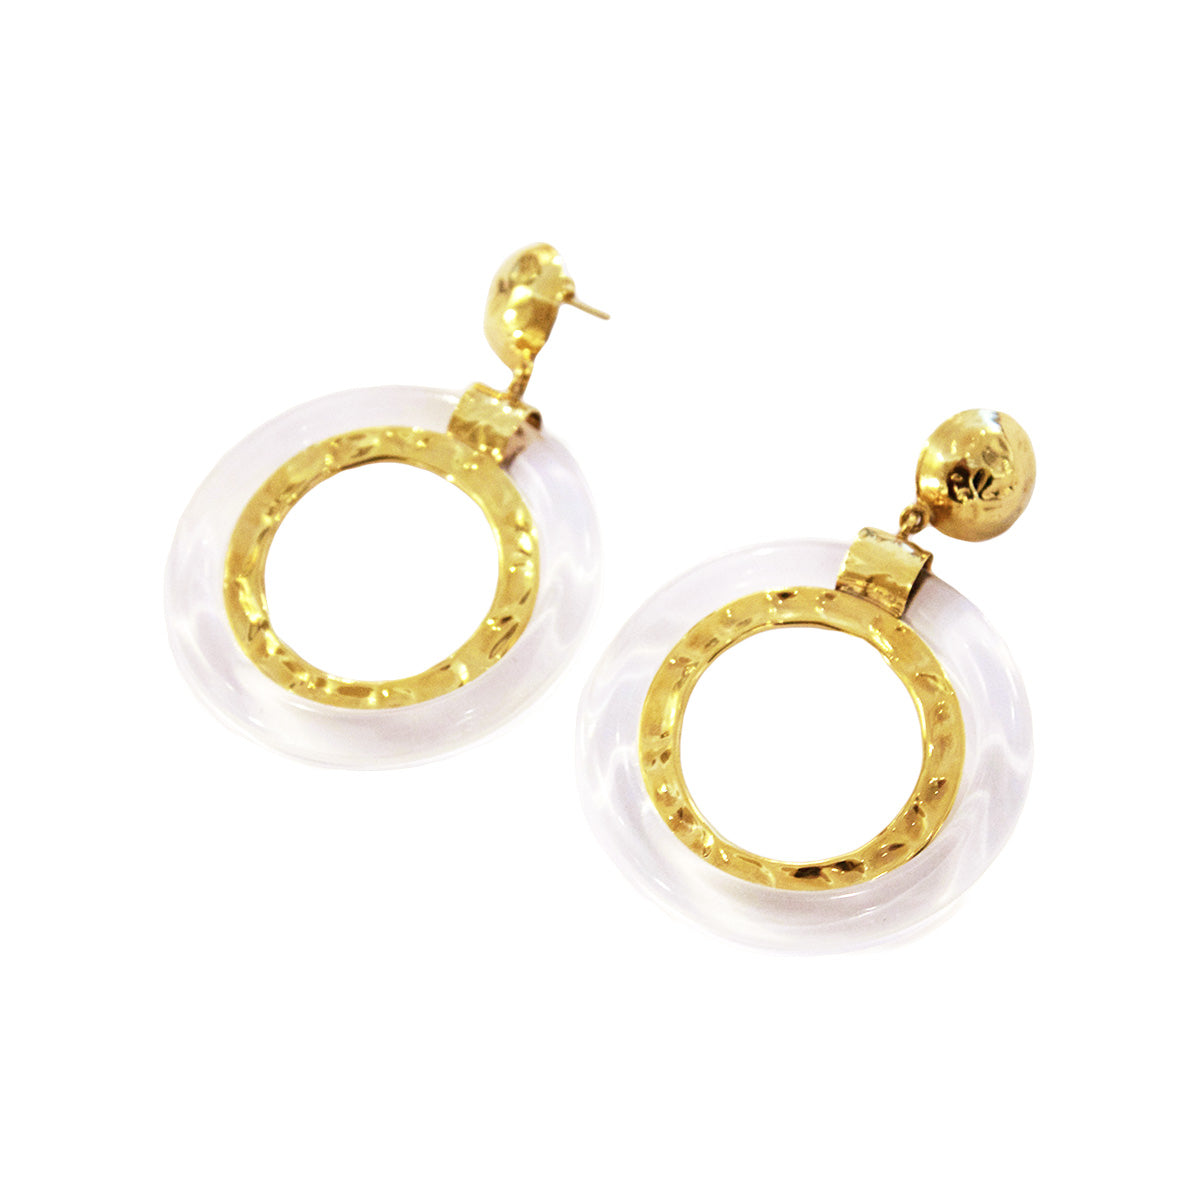 Pair of French Poggi Paris lucite and gold metal hoop earrings.